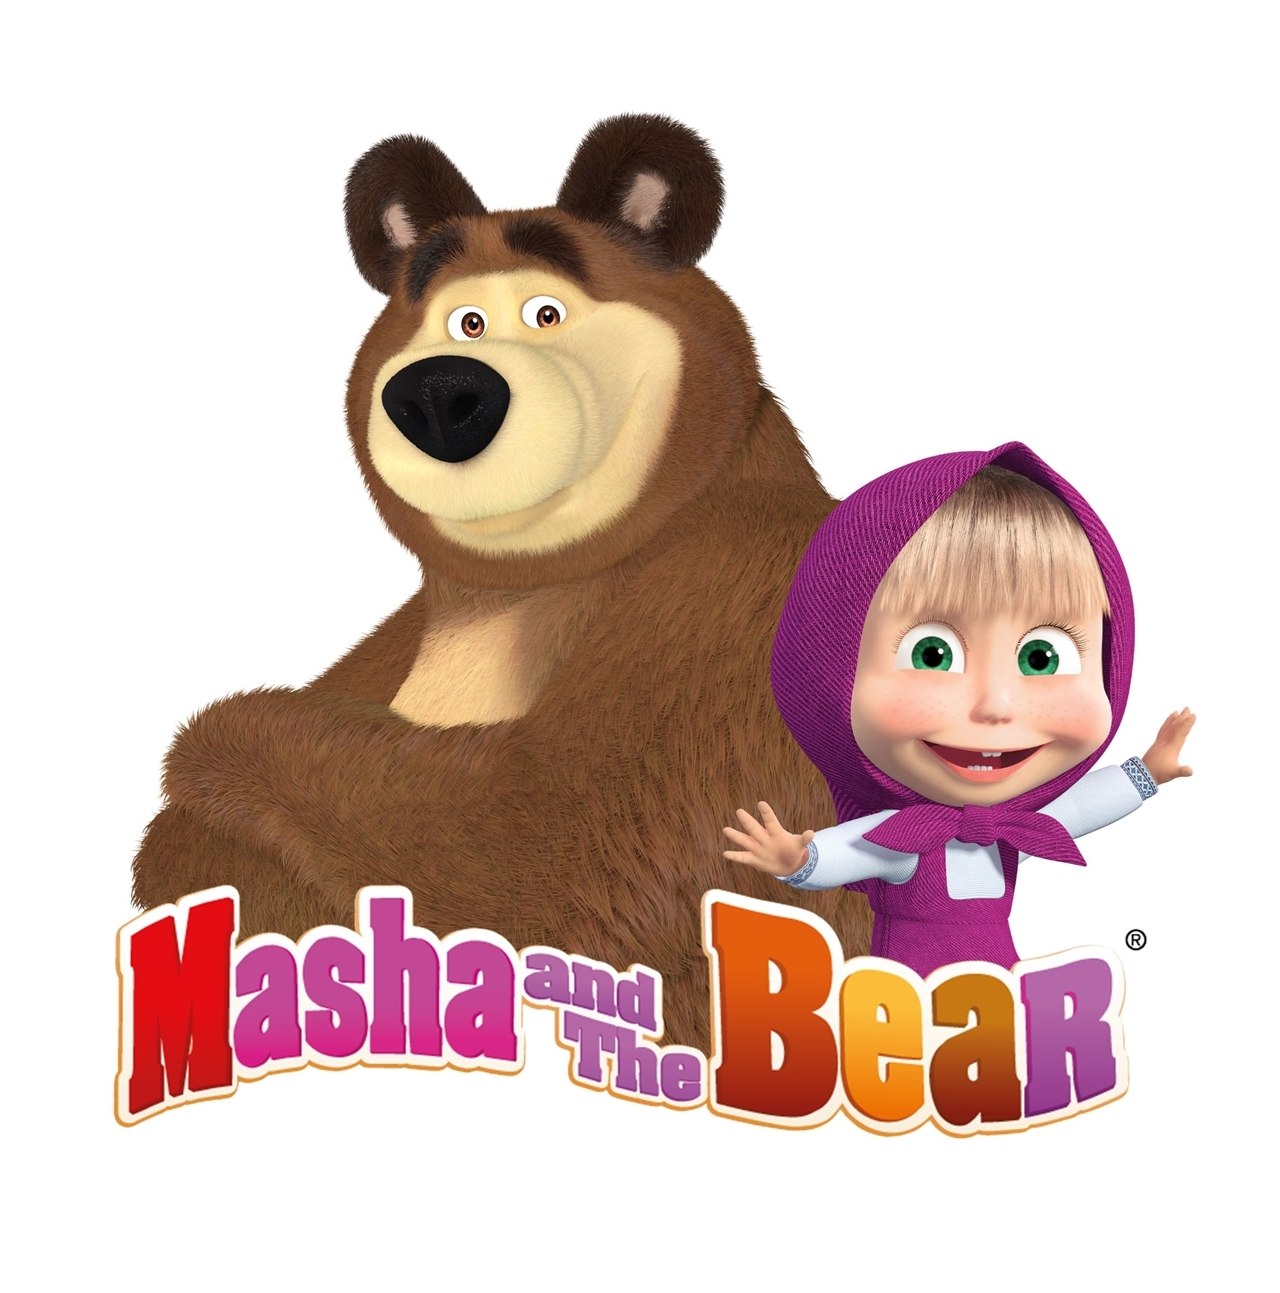 Masha and the bear in english